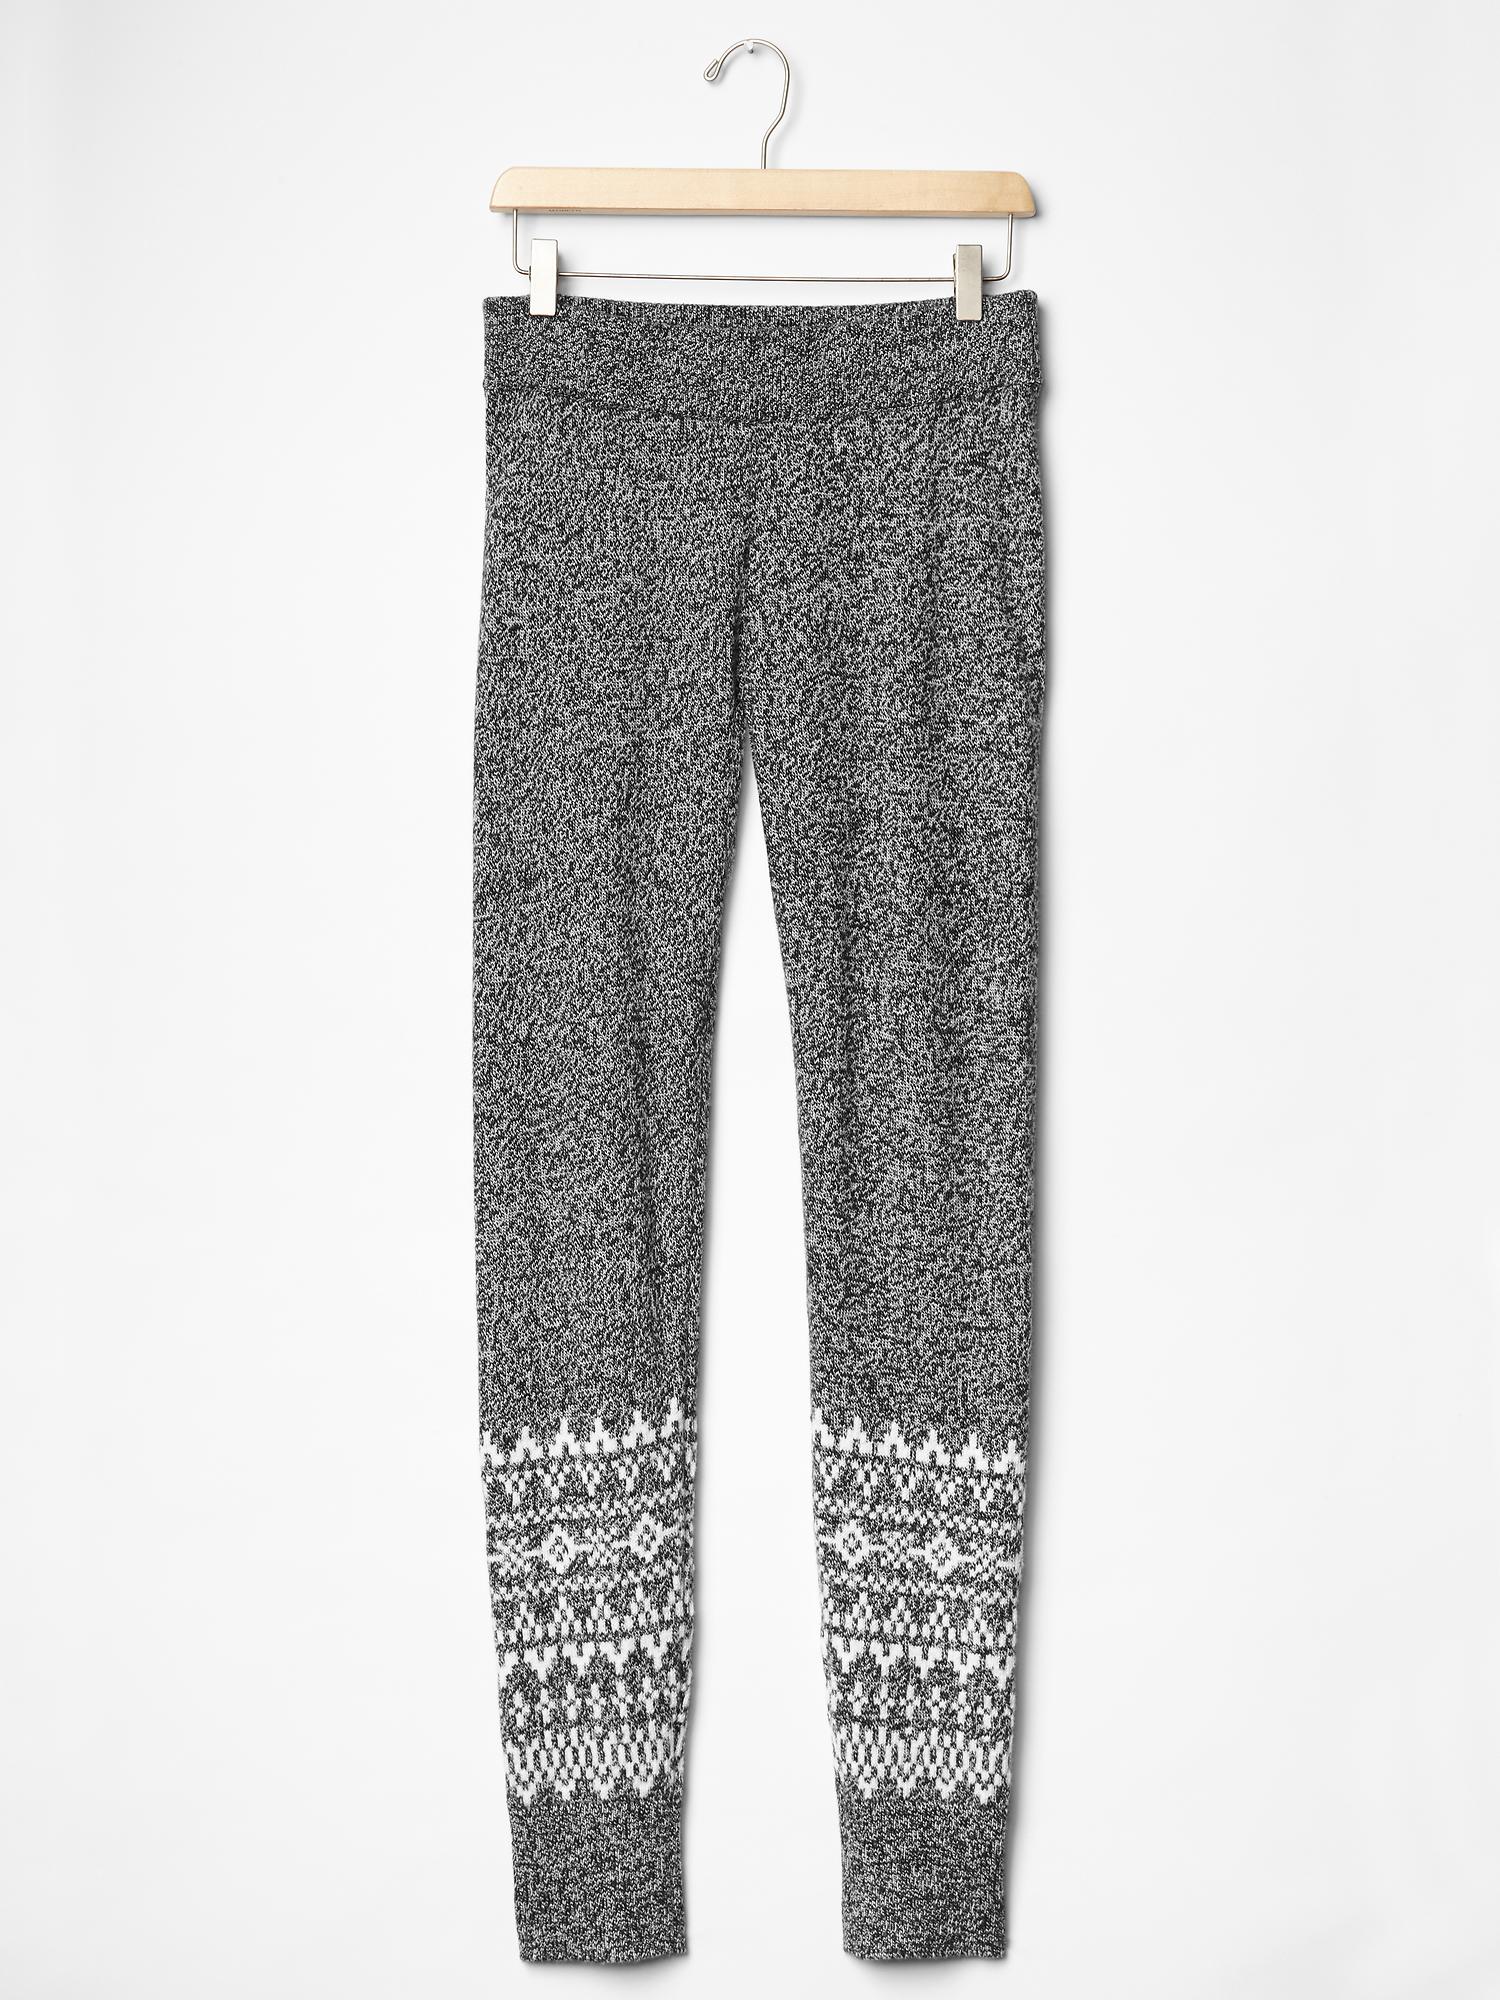 Knit leggings 1, fair isle nether garment, semi tropical